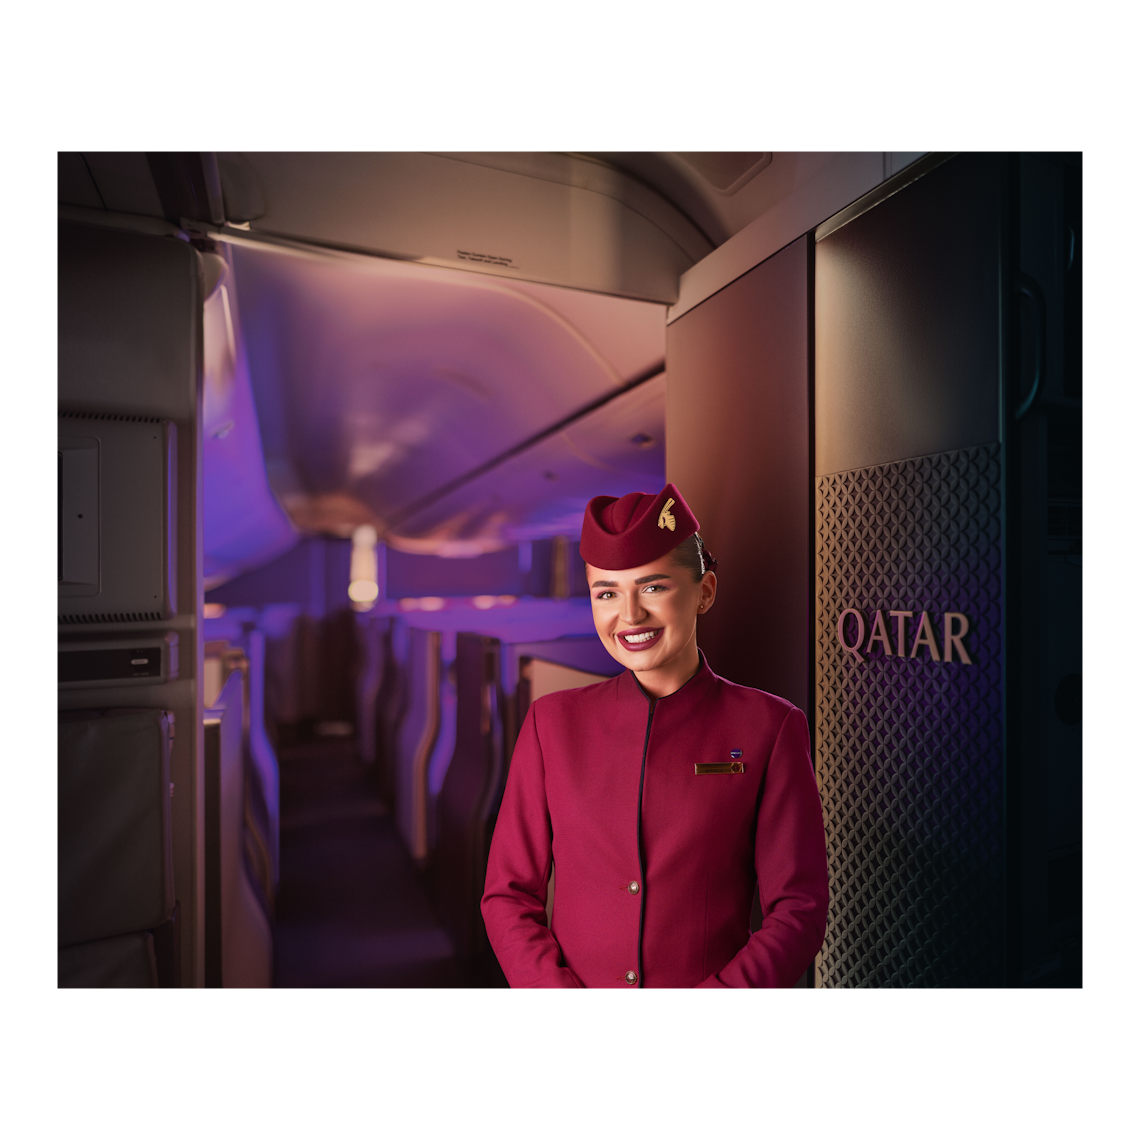 A member of Qatar Airways' cabin crew